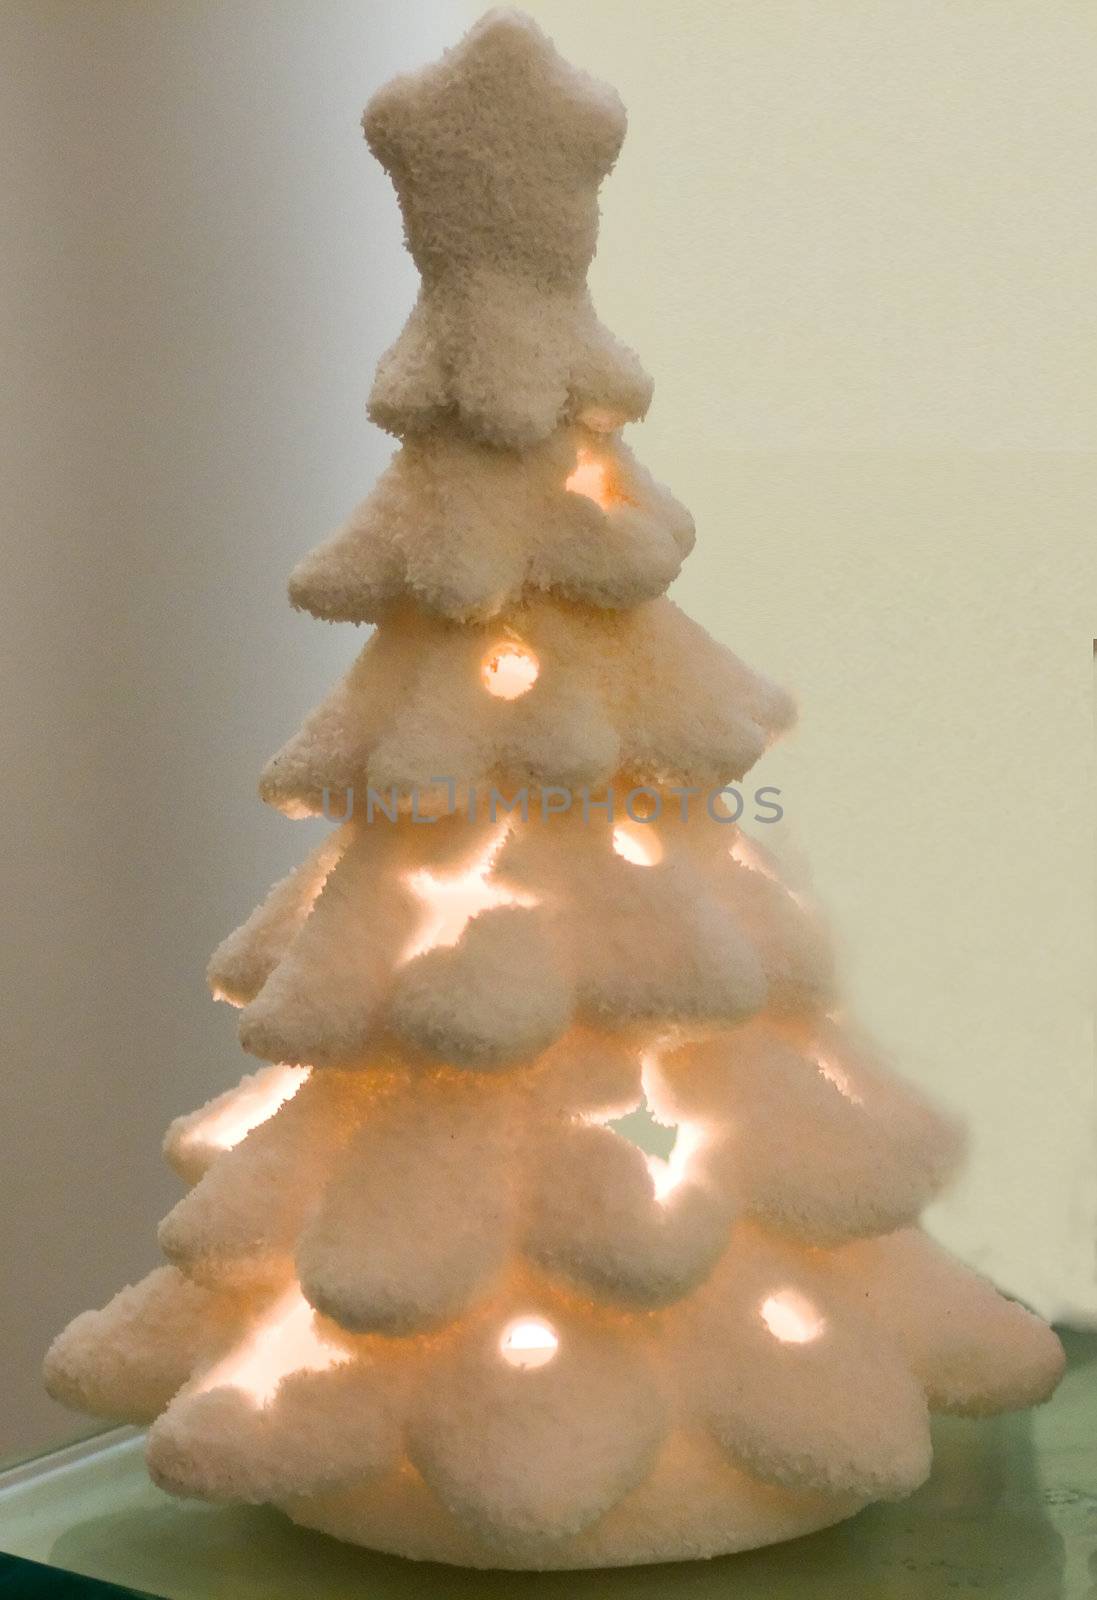 Little Christmas Tree by Koufax73